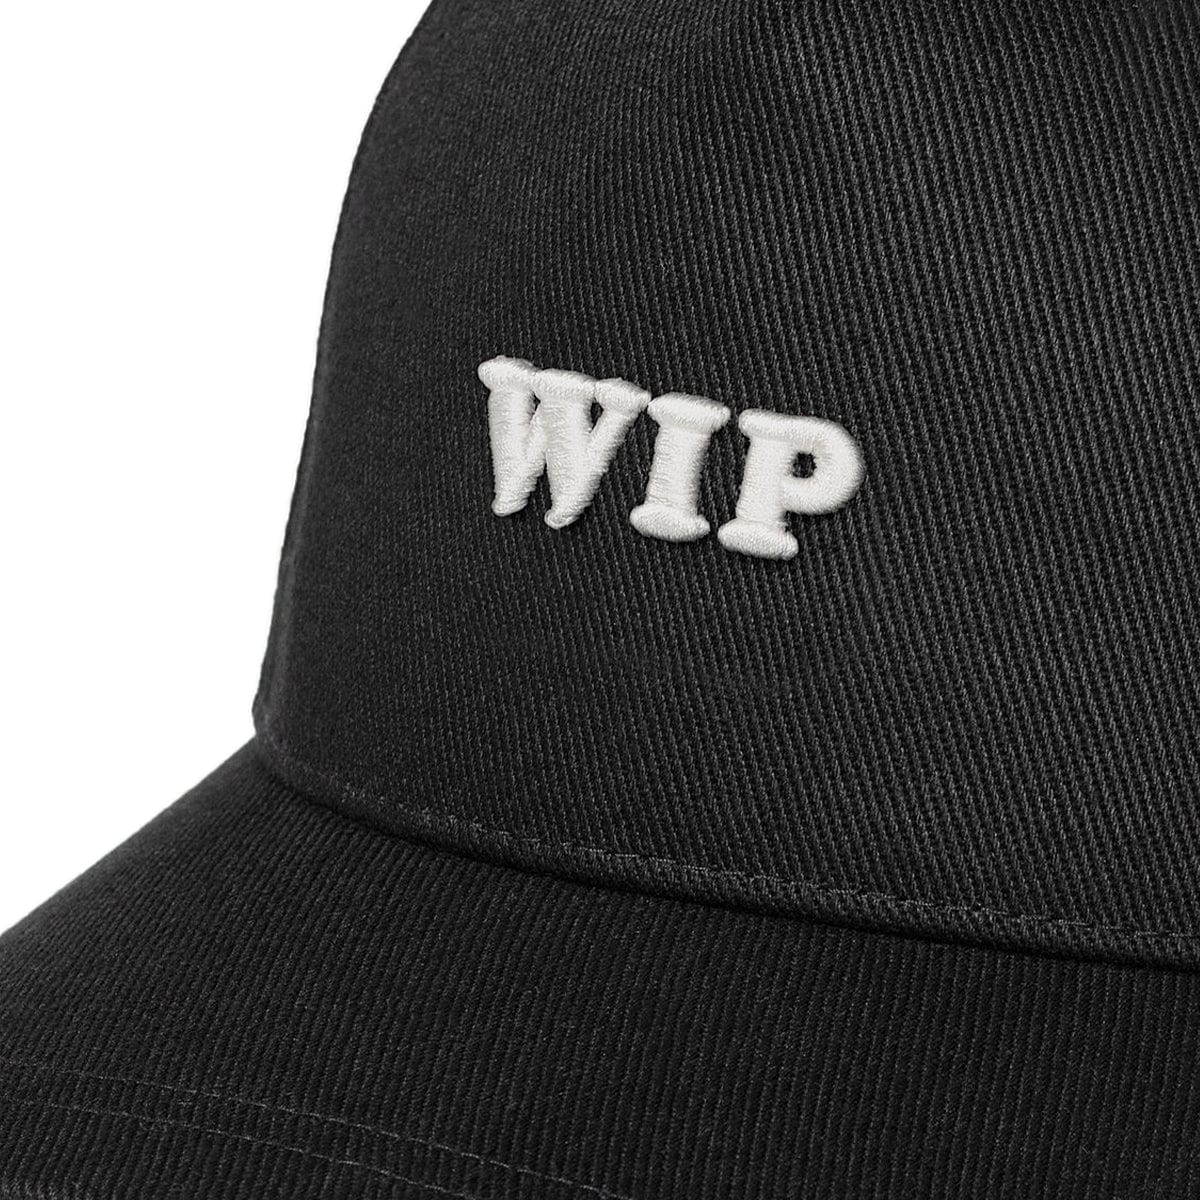 Carhartt WIP Headwear BLACK/WAX / O/S WIP CAP